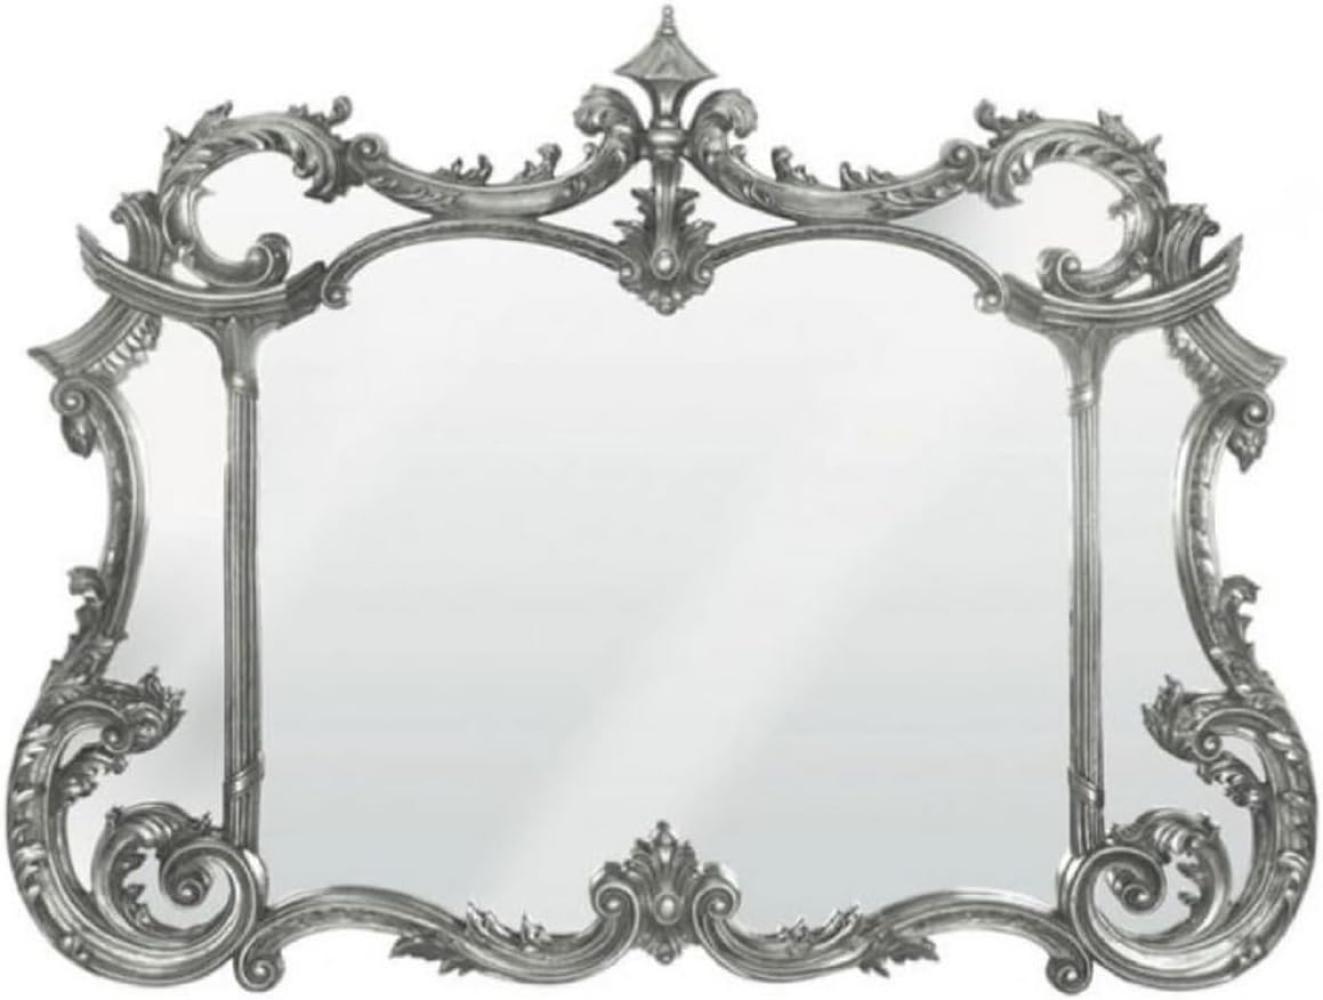 Casa Padrino Barock Spiegel Antik Silber 129 x H. 99 cm - Prunkvoller Wandspiegel im Barockstil - Antik Stil Garderoben Spiegel - Barock Interior - Handgefertigte Barock Möbel Bild 1